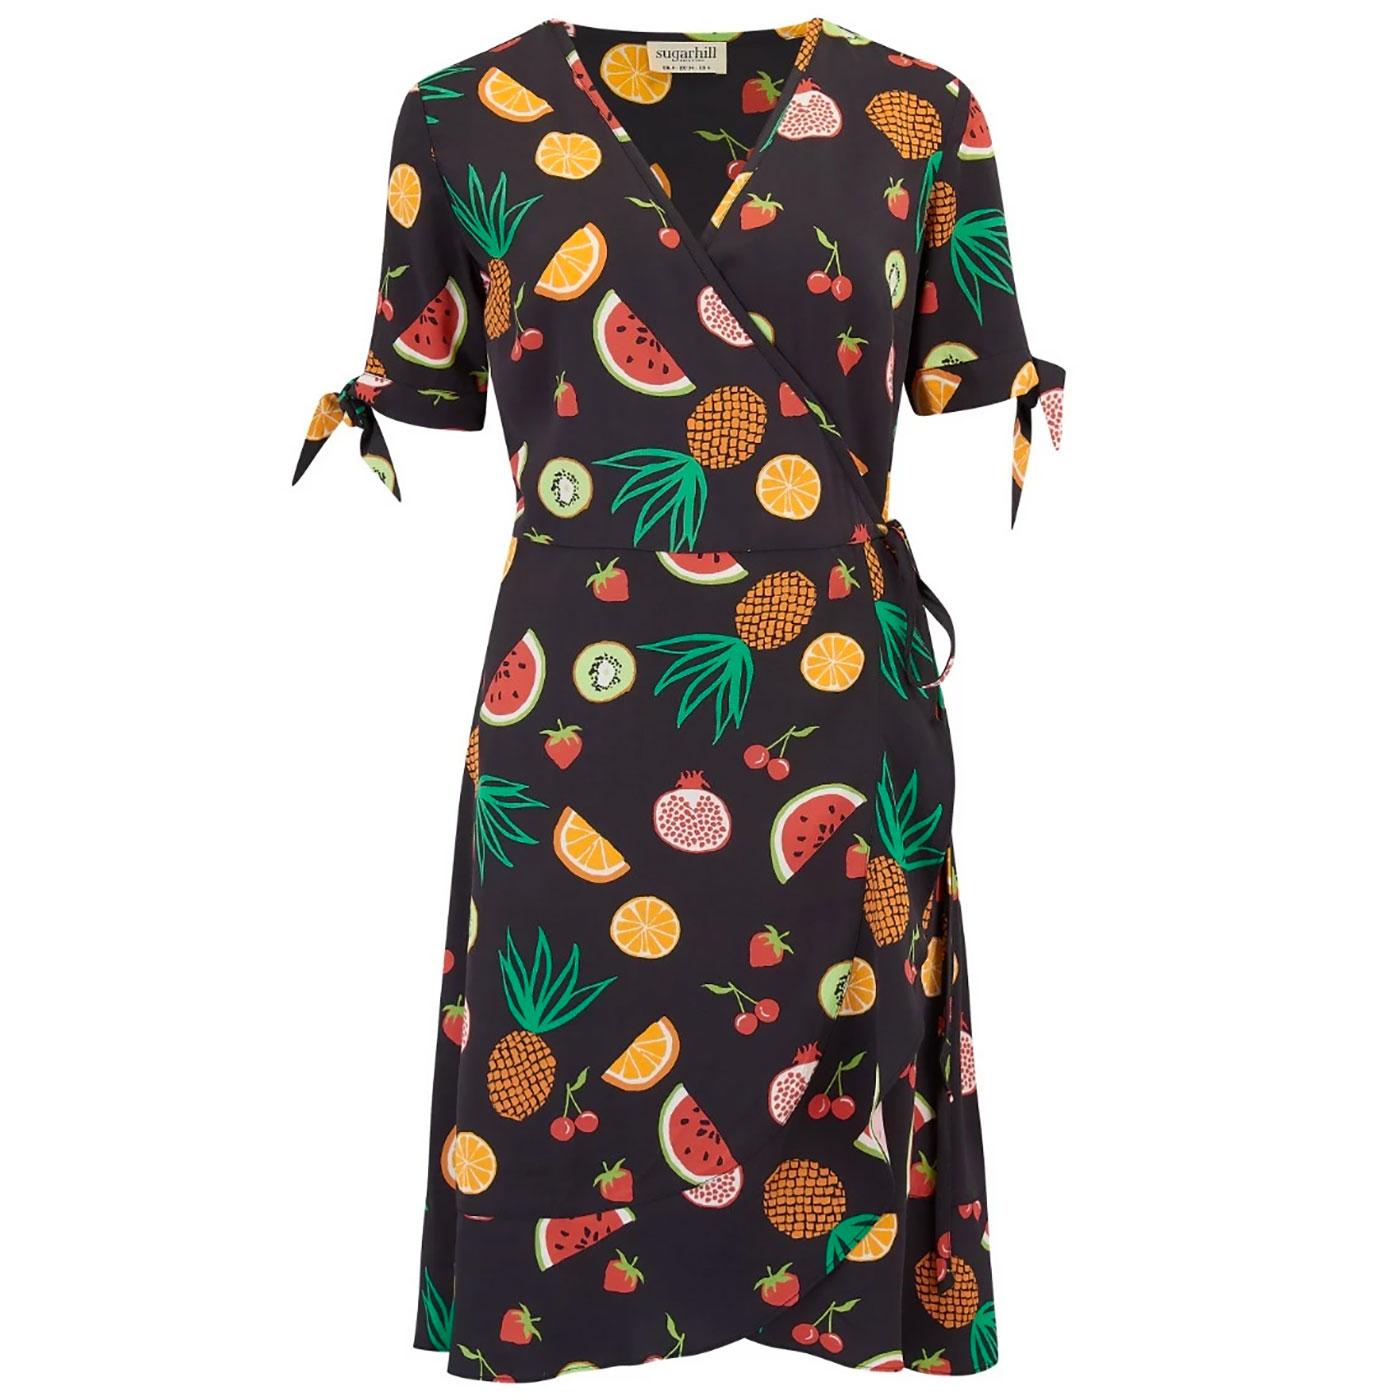 Jessica SUGARHILL 50s Fruit Punch Frill Wrap Dress